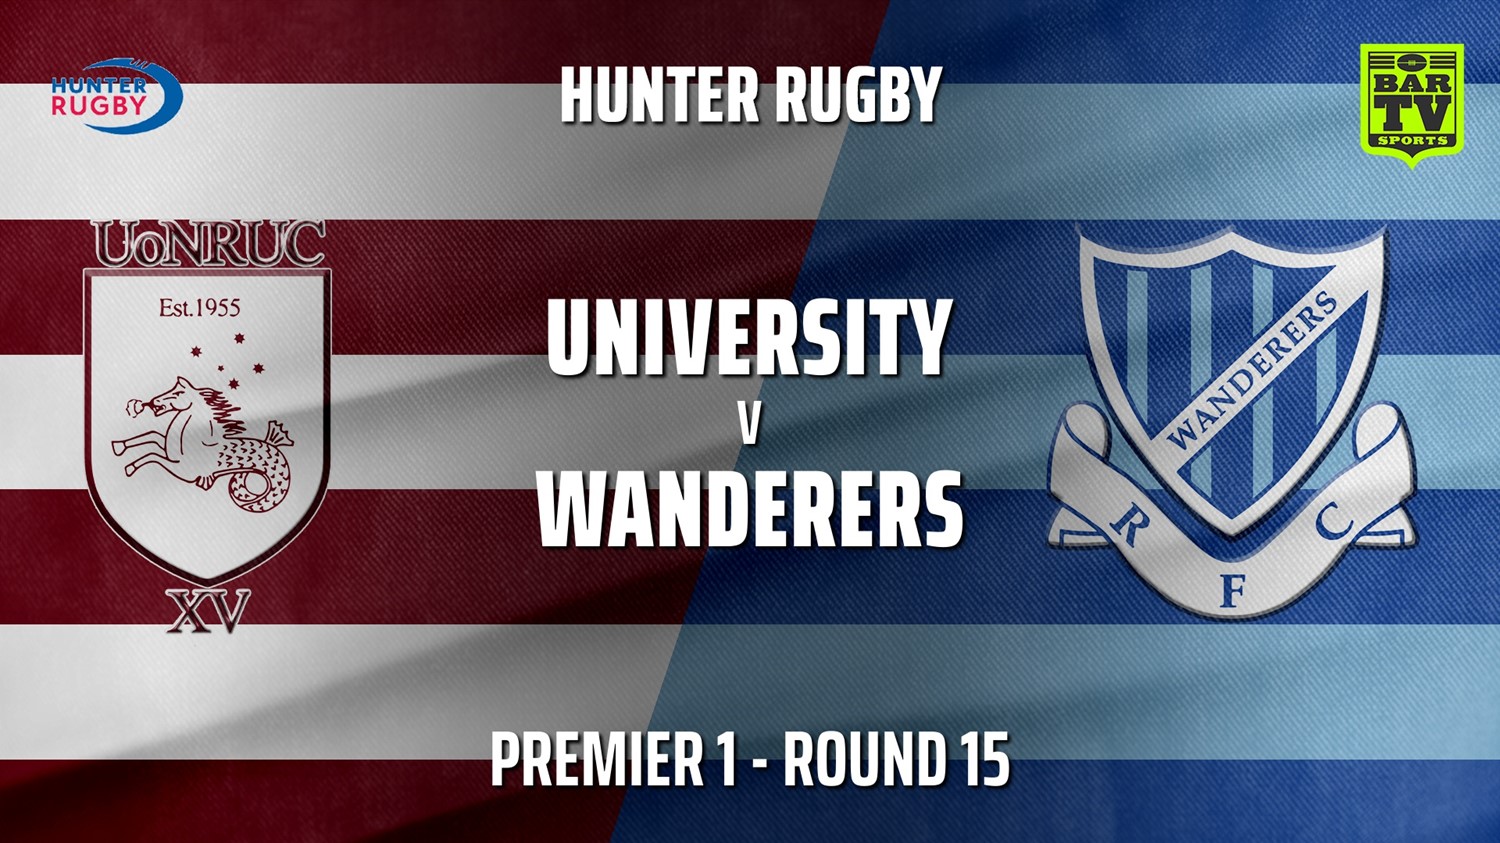 210731-Hunter Rugby Round 15 - Premier 1 - University Of Newcastle v Wanderers Slate Image